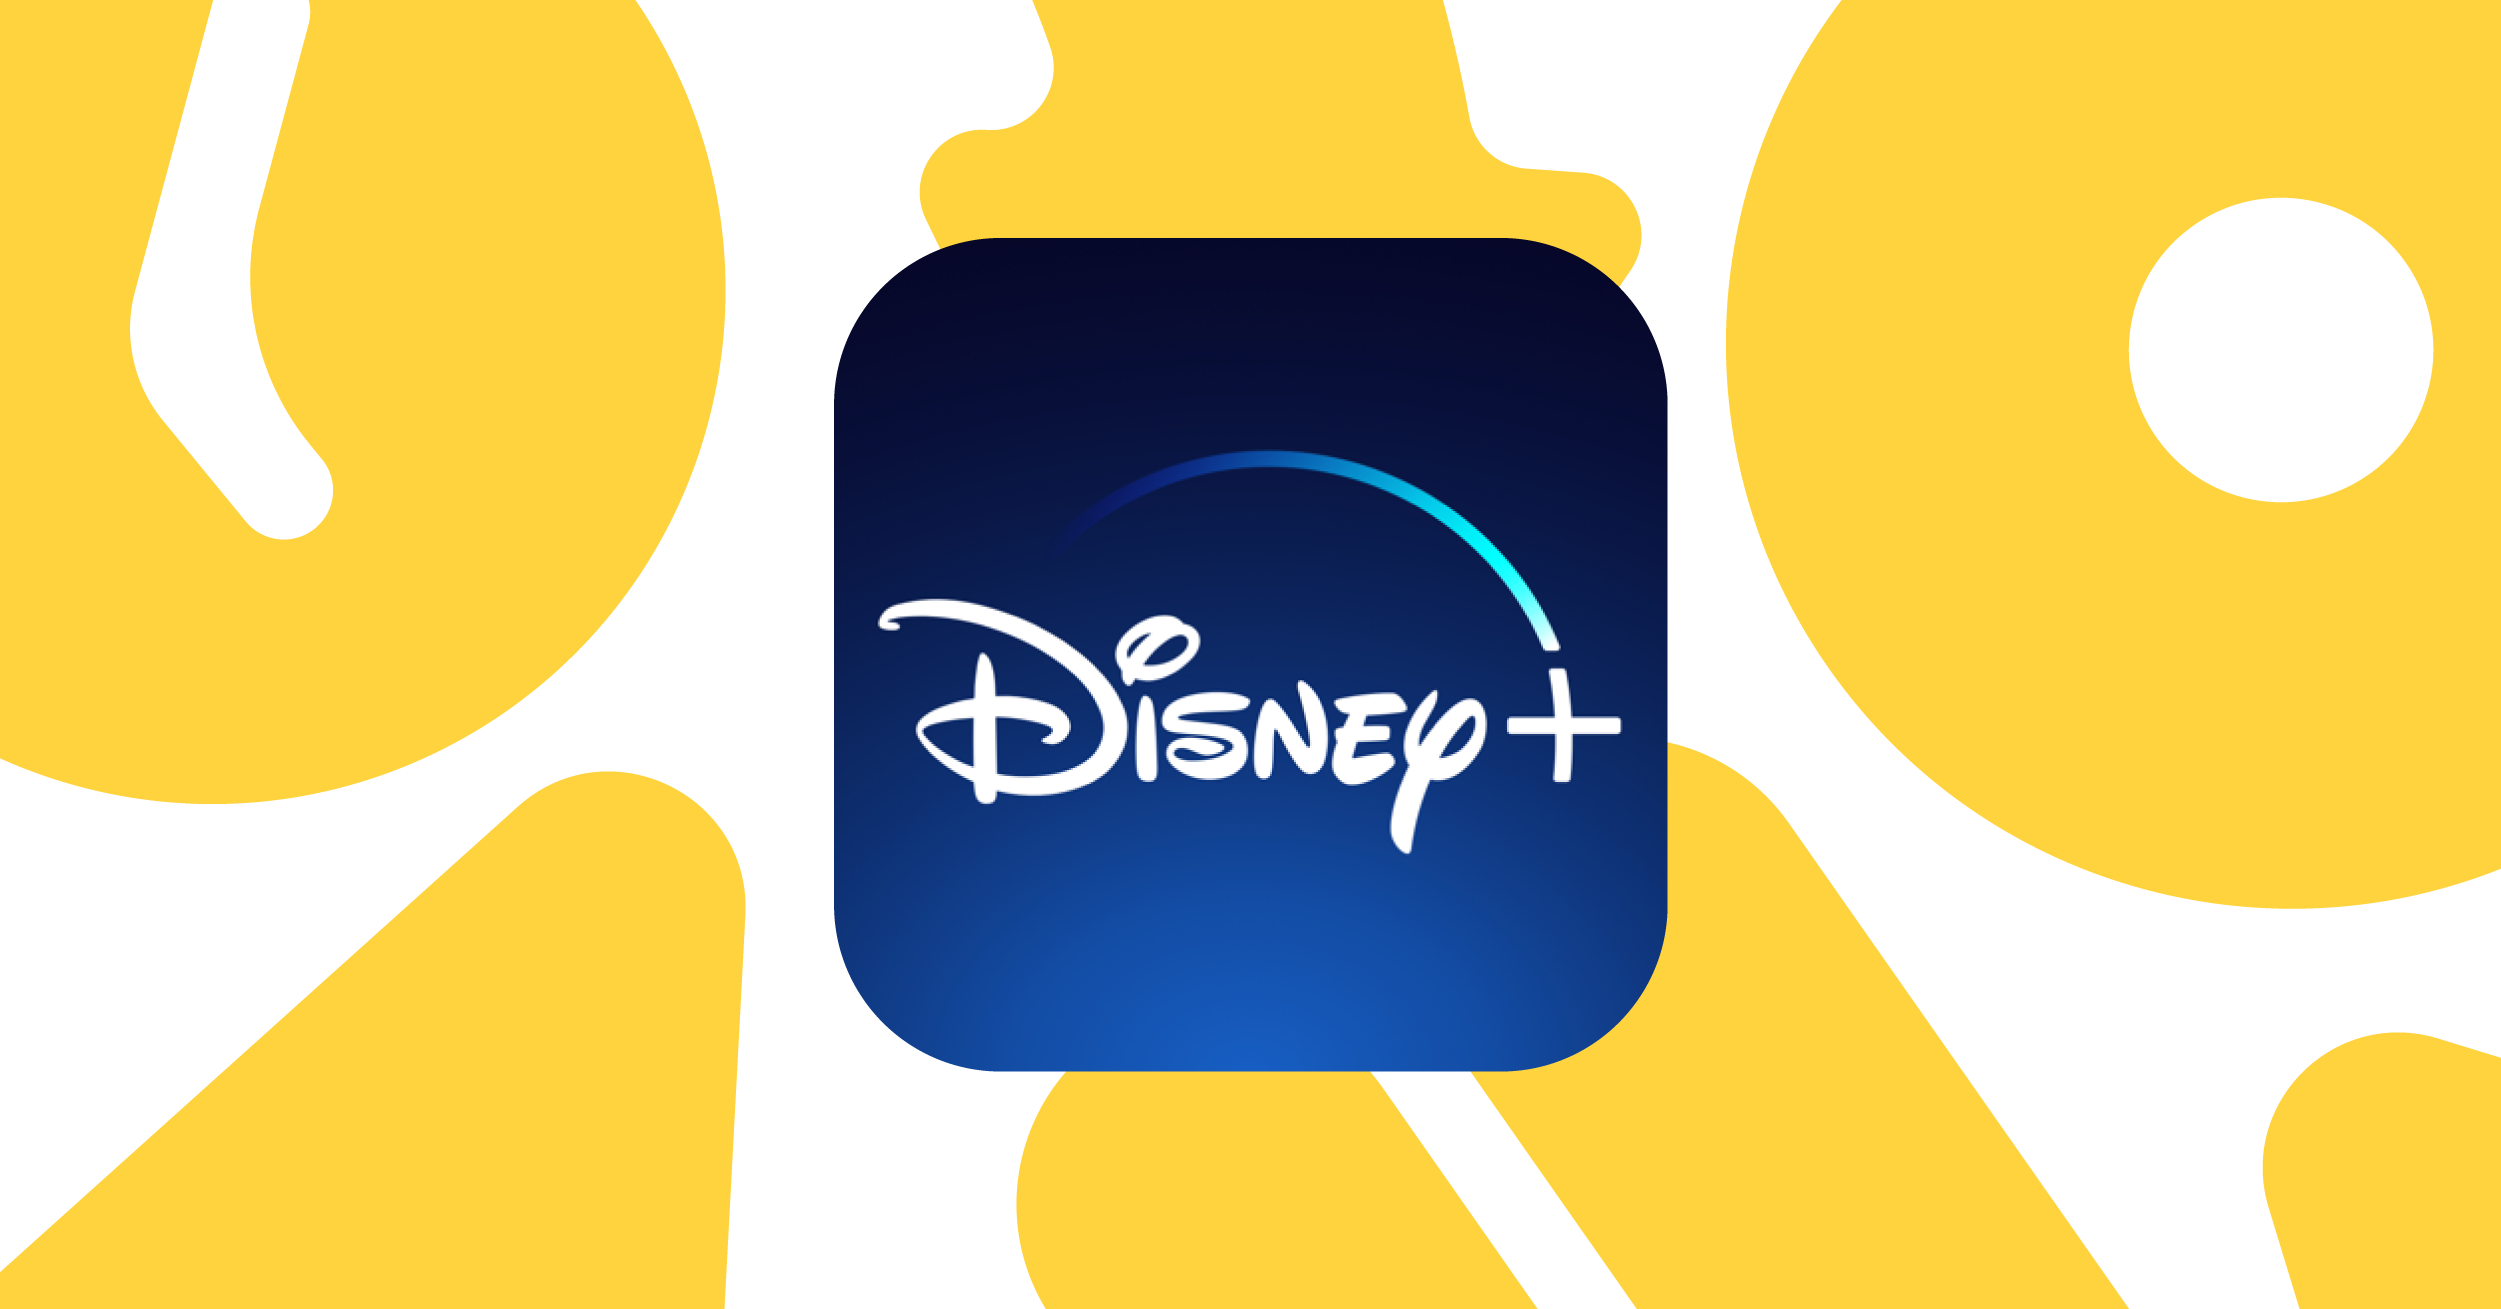 App review of Disney Junior Play - Children and Media Australia